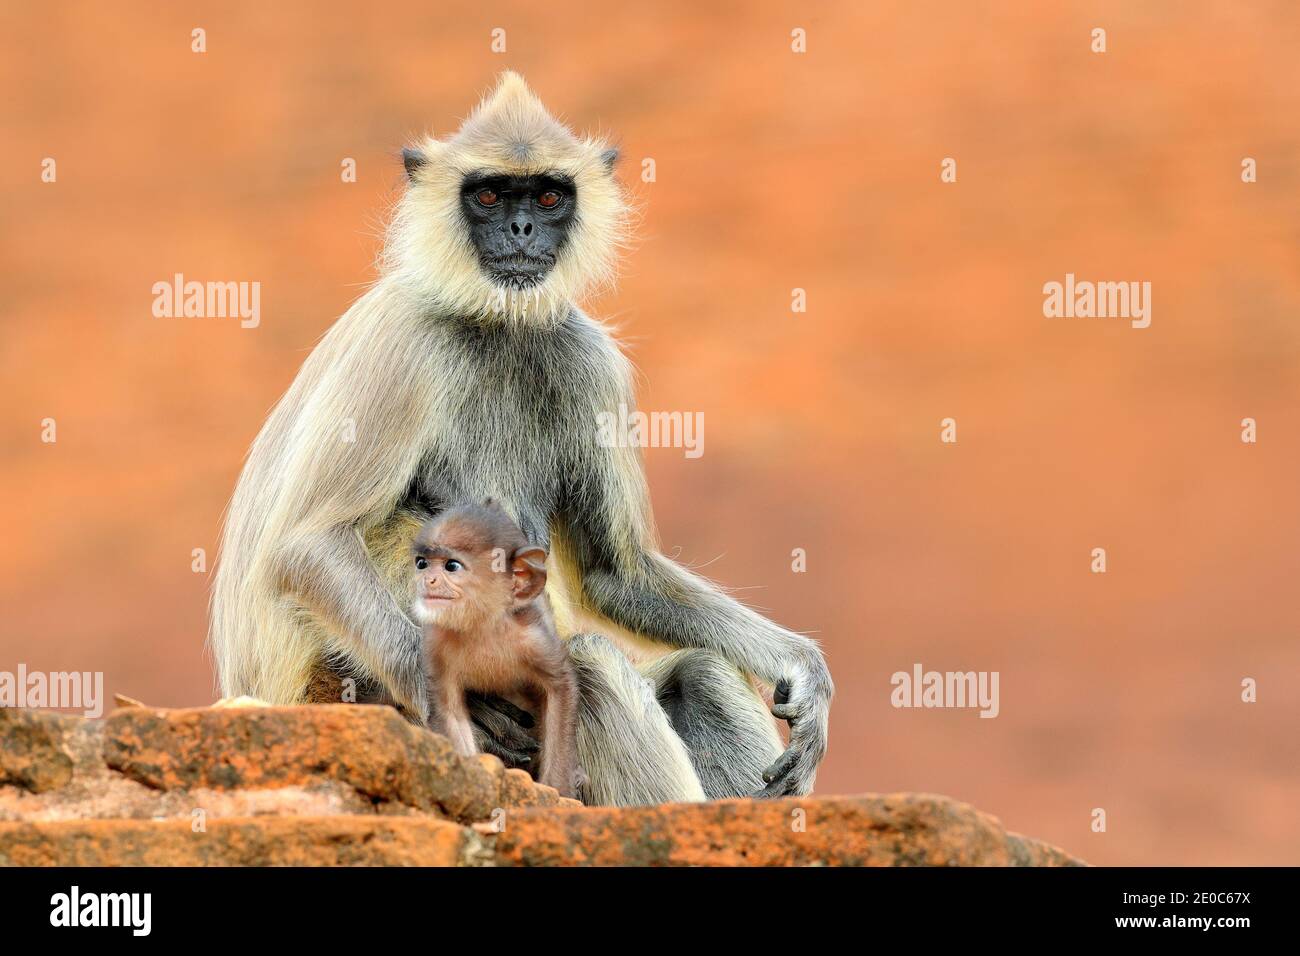 Wildlife of Sri Lanka, detail monkey portrait Common Langur, Semnopithecus entellus. Monkey head on the orange brick building, urban wildlife. Stock Photo